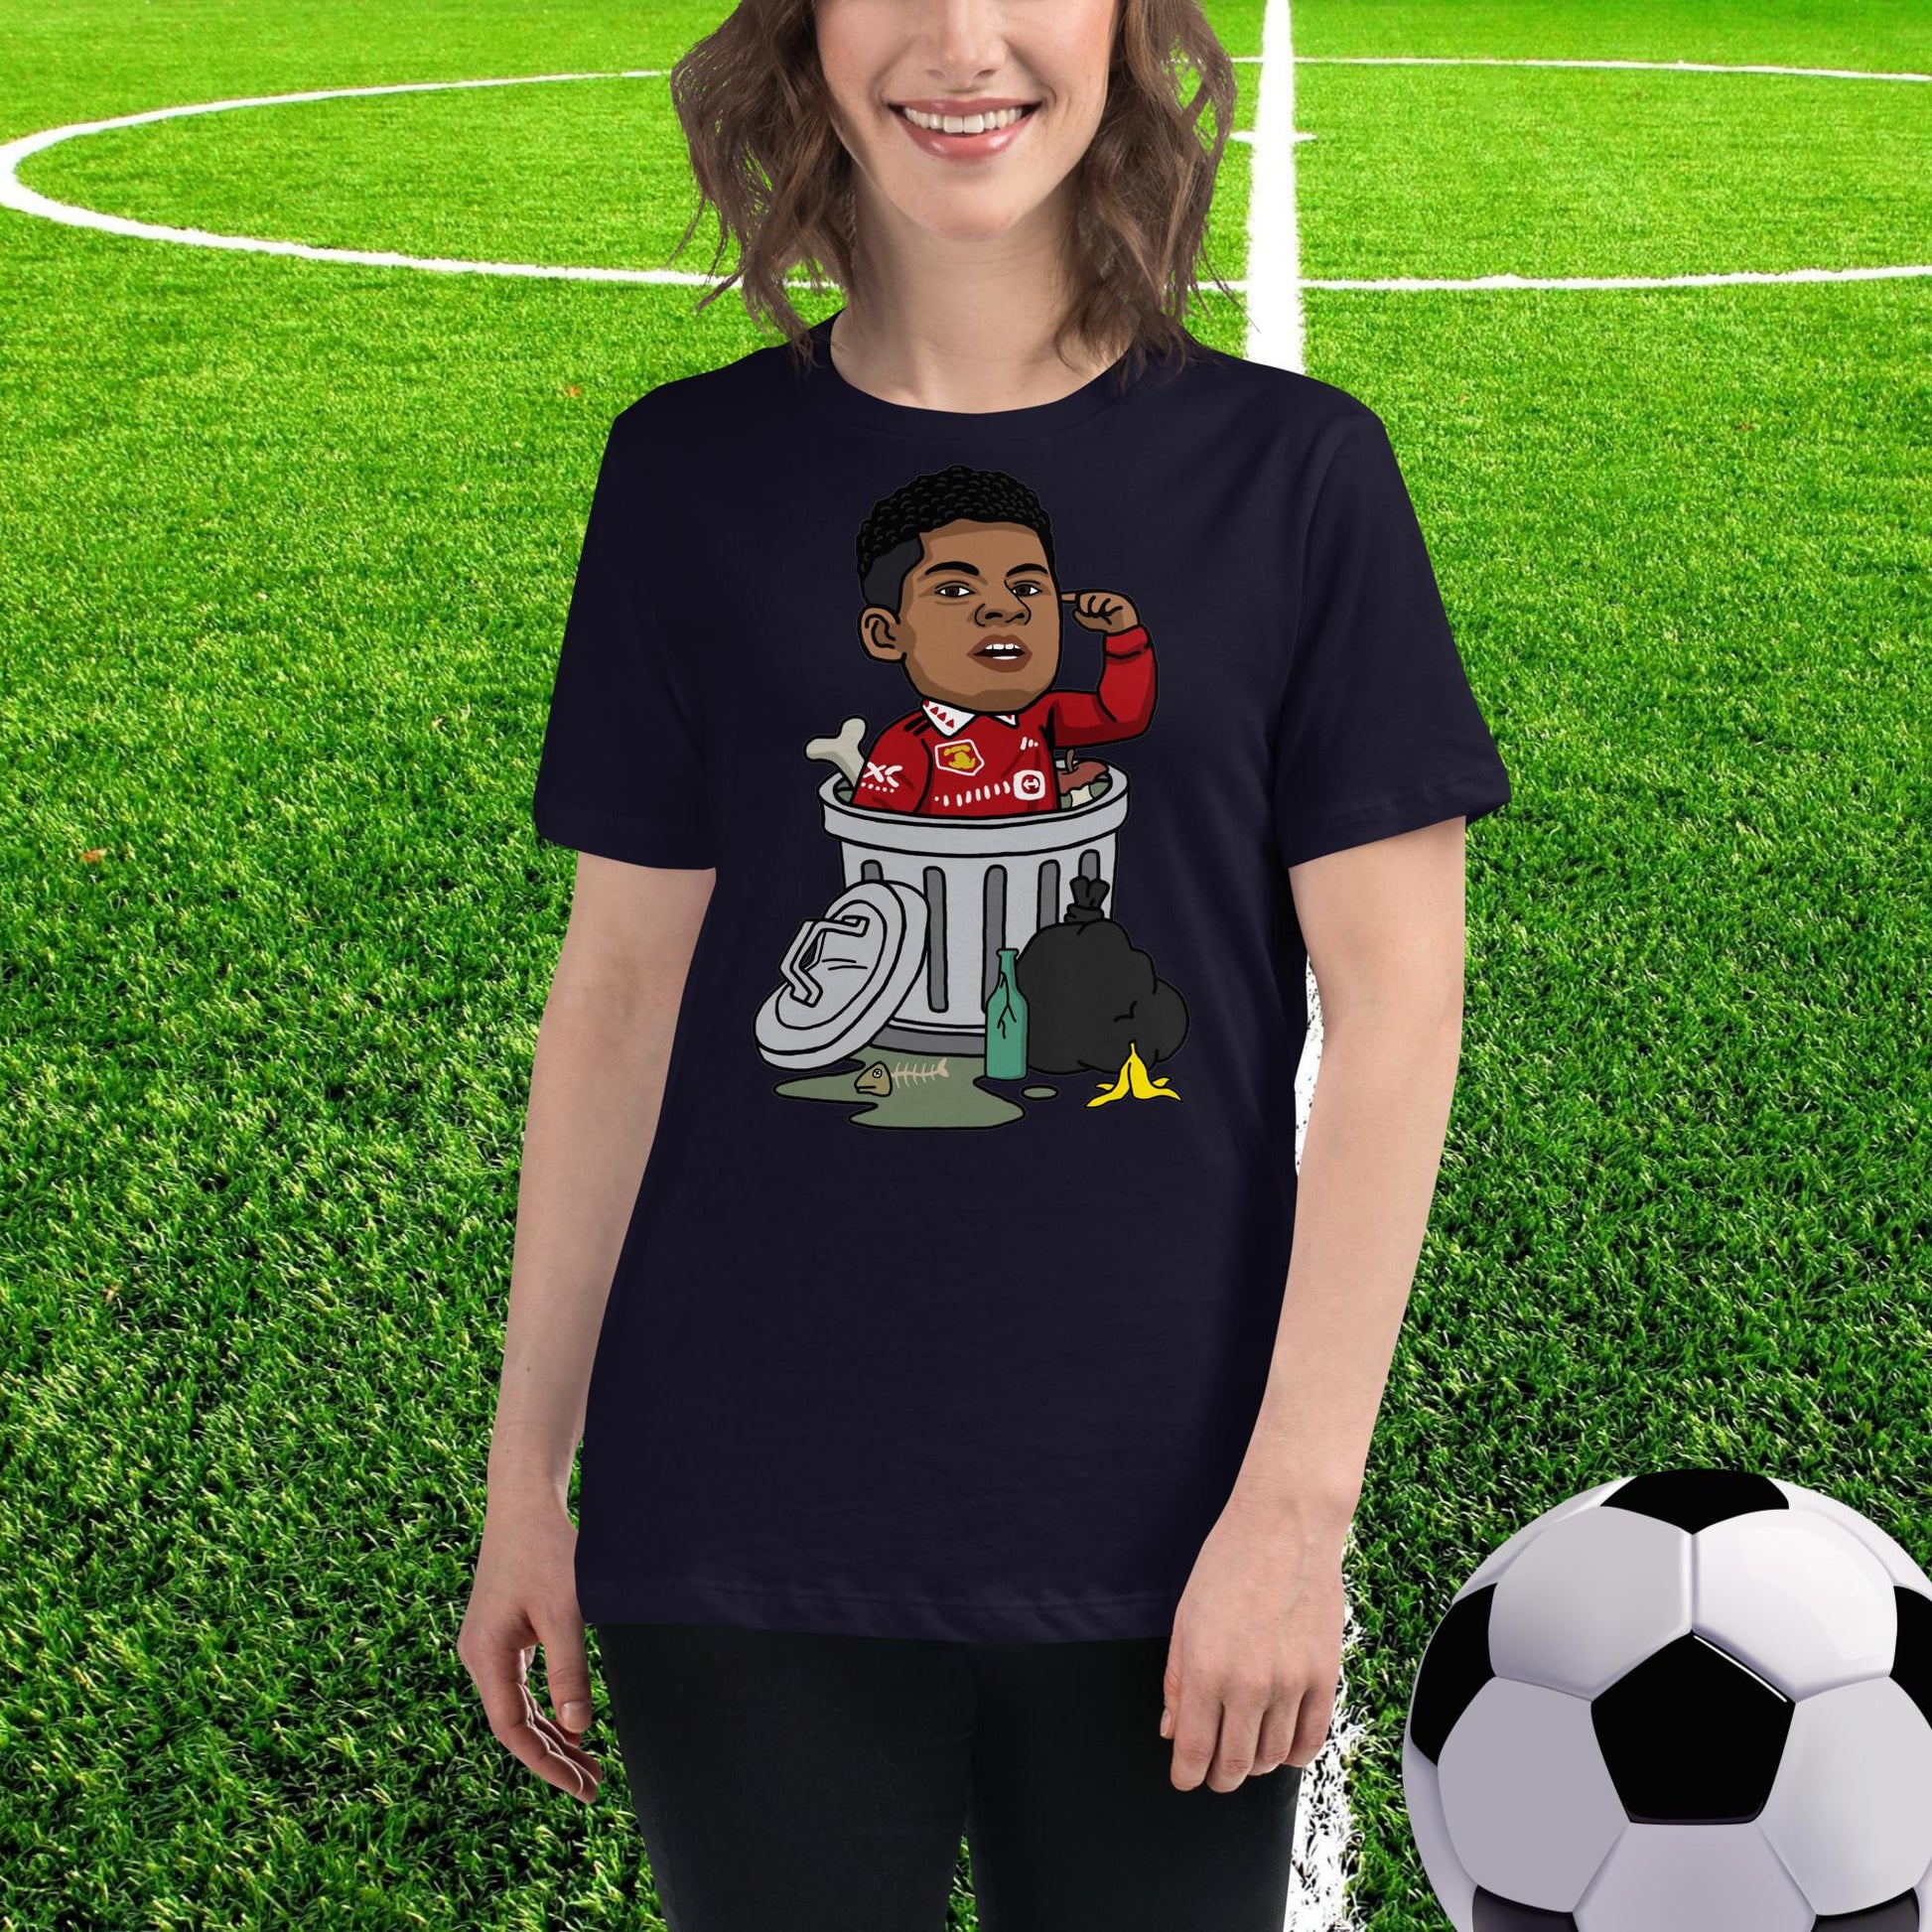 Trashford Marcus Rashford Manchester United Gift Man United Gift Marcus Rashford Women's Relaxed T-Shirt Next Cult Brand